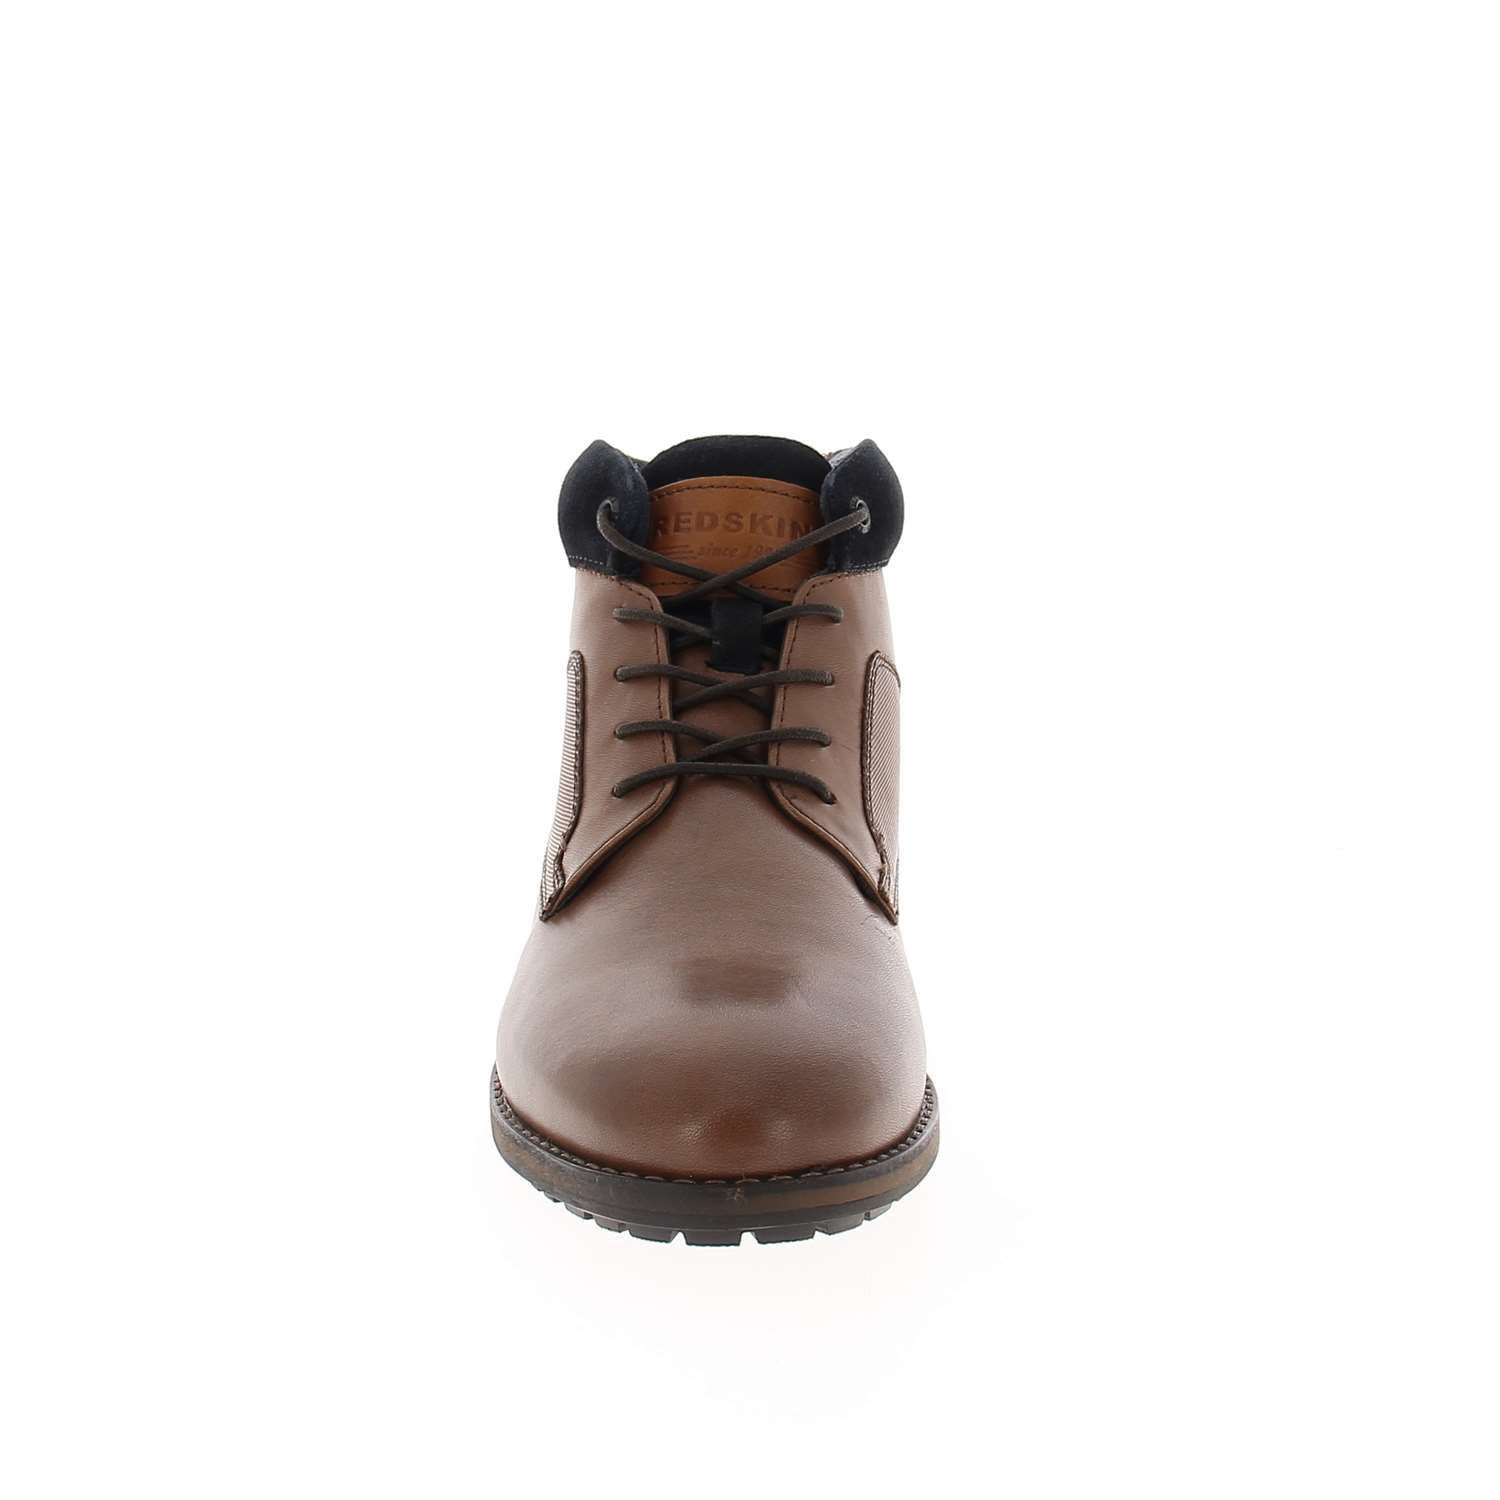 03 - ETHIS - CLEON - Boots et bottines - Cuir